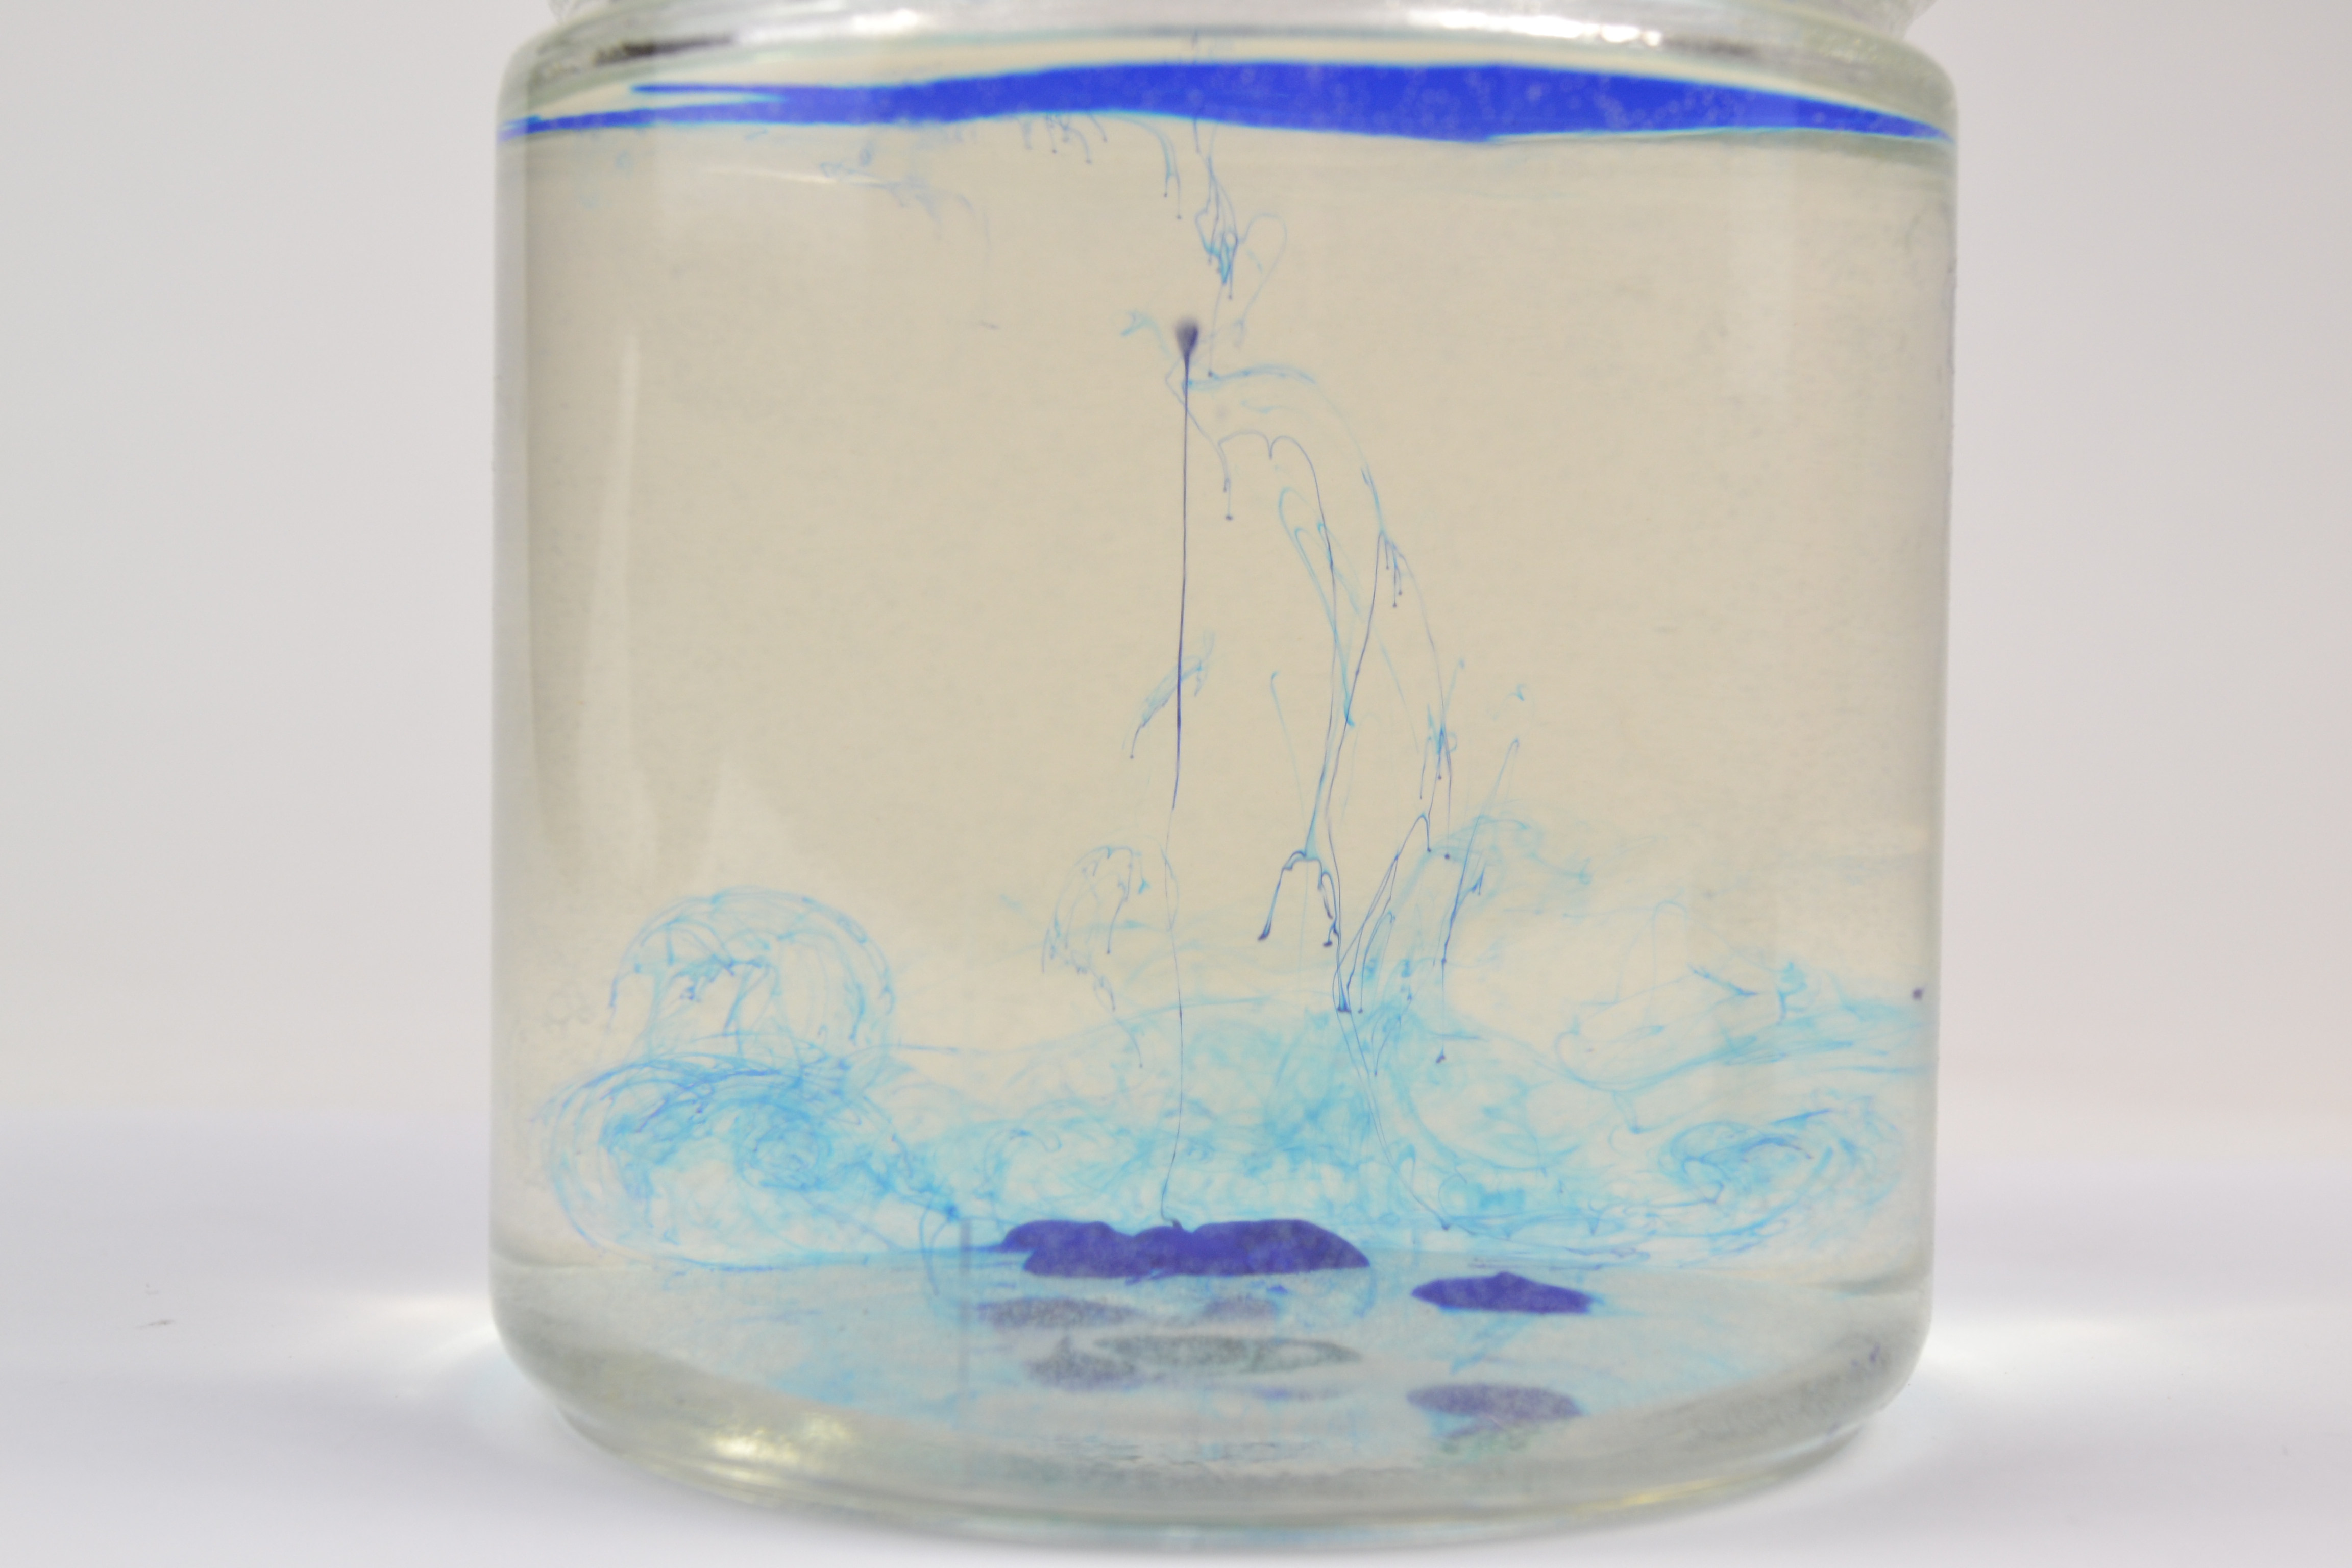 aqua-dispersions in water 1